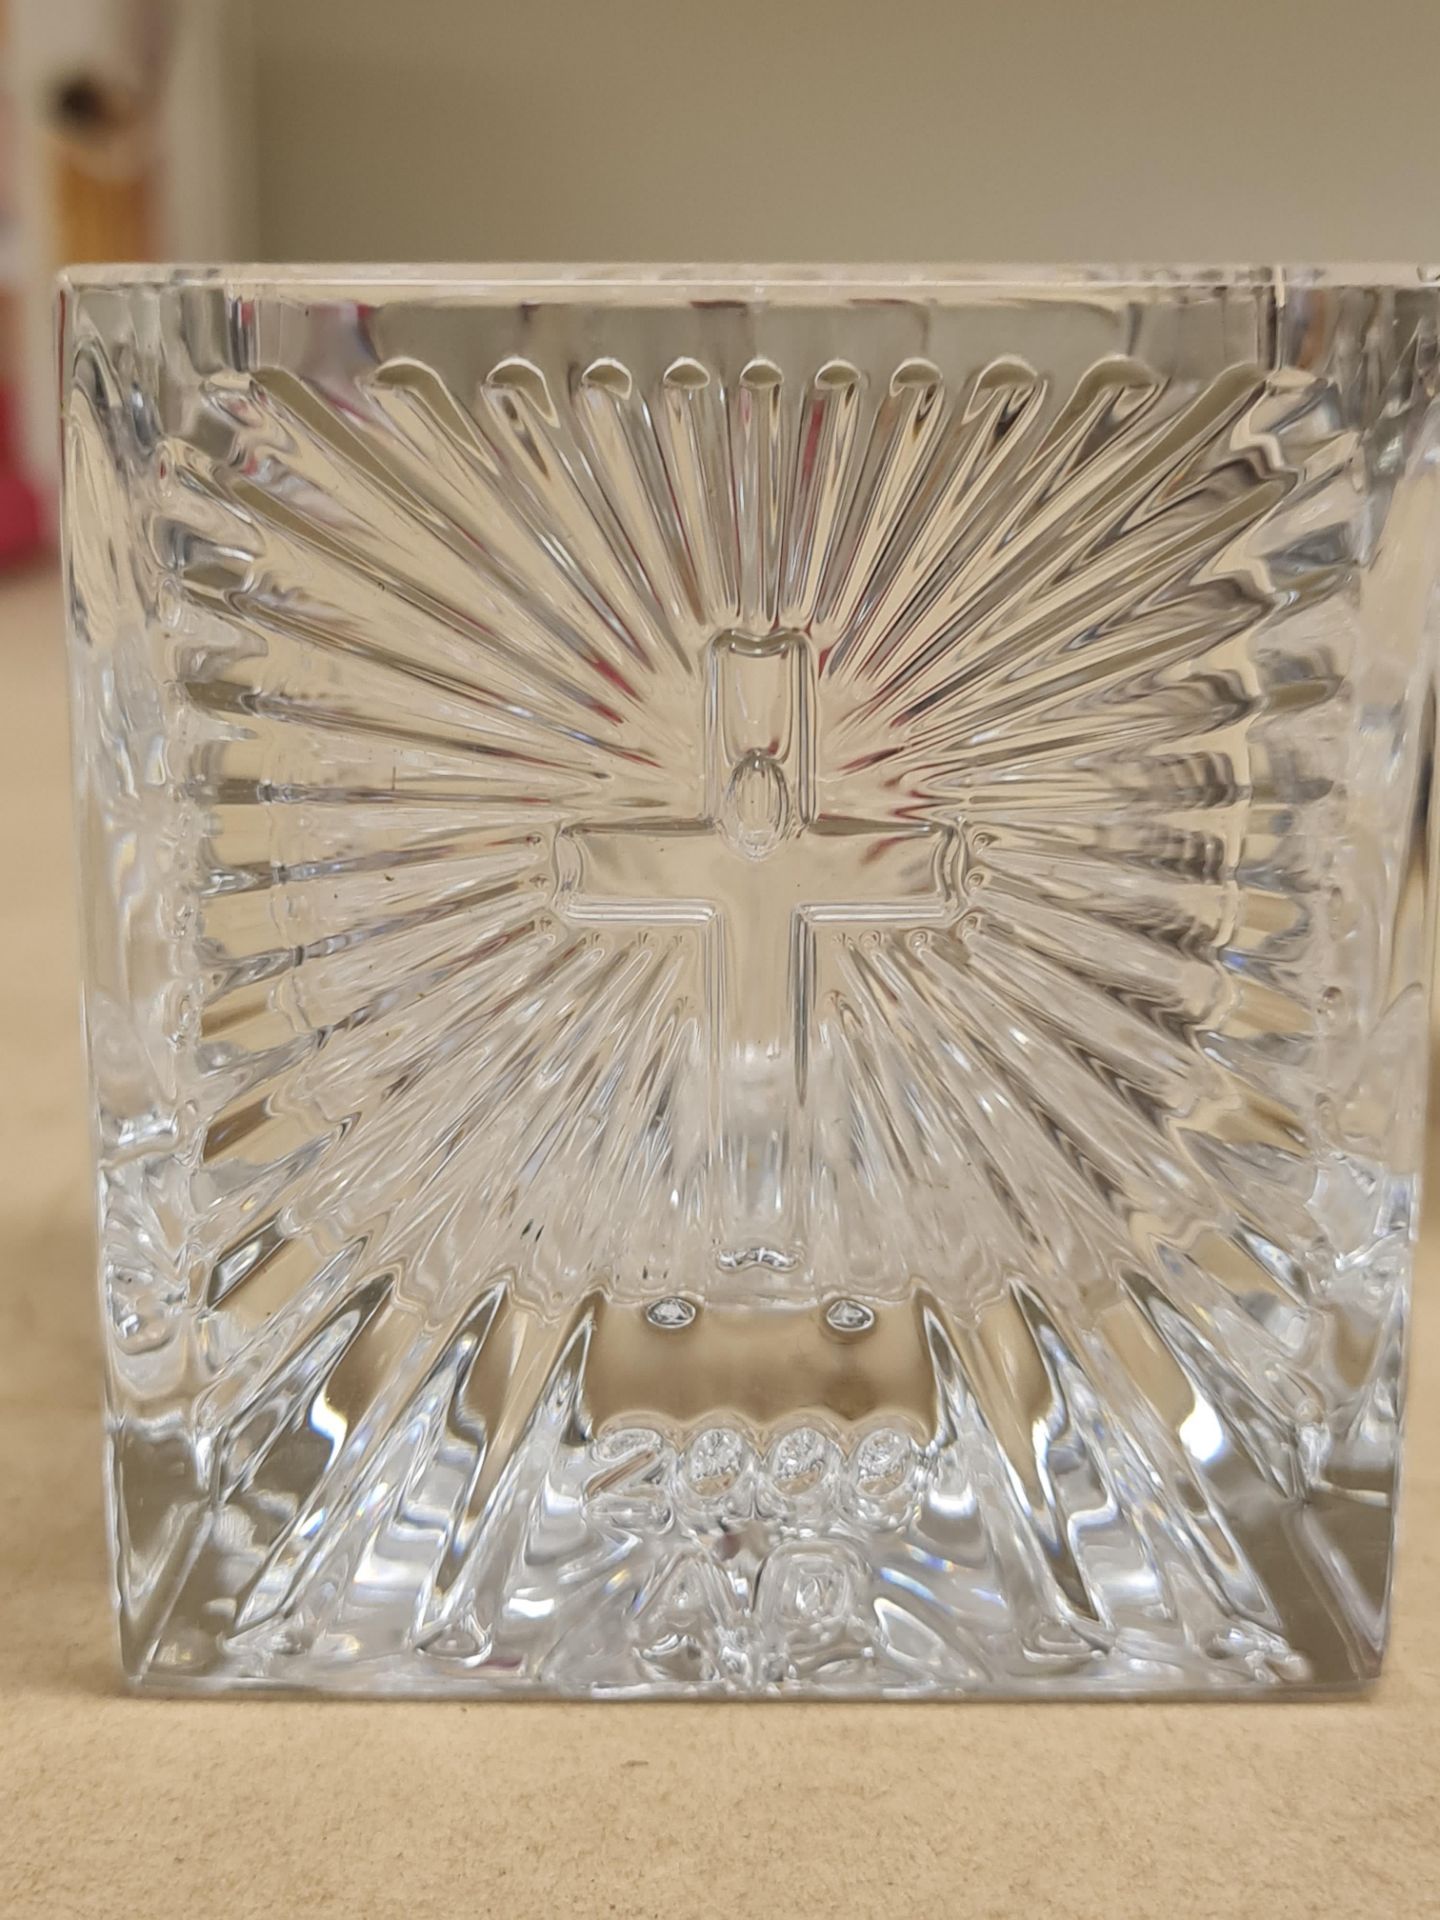 waterford crystal holder